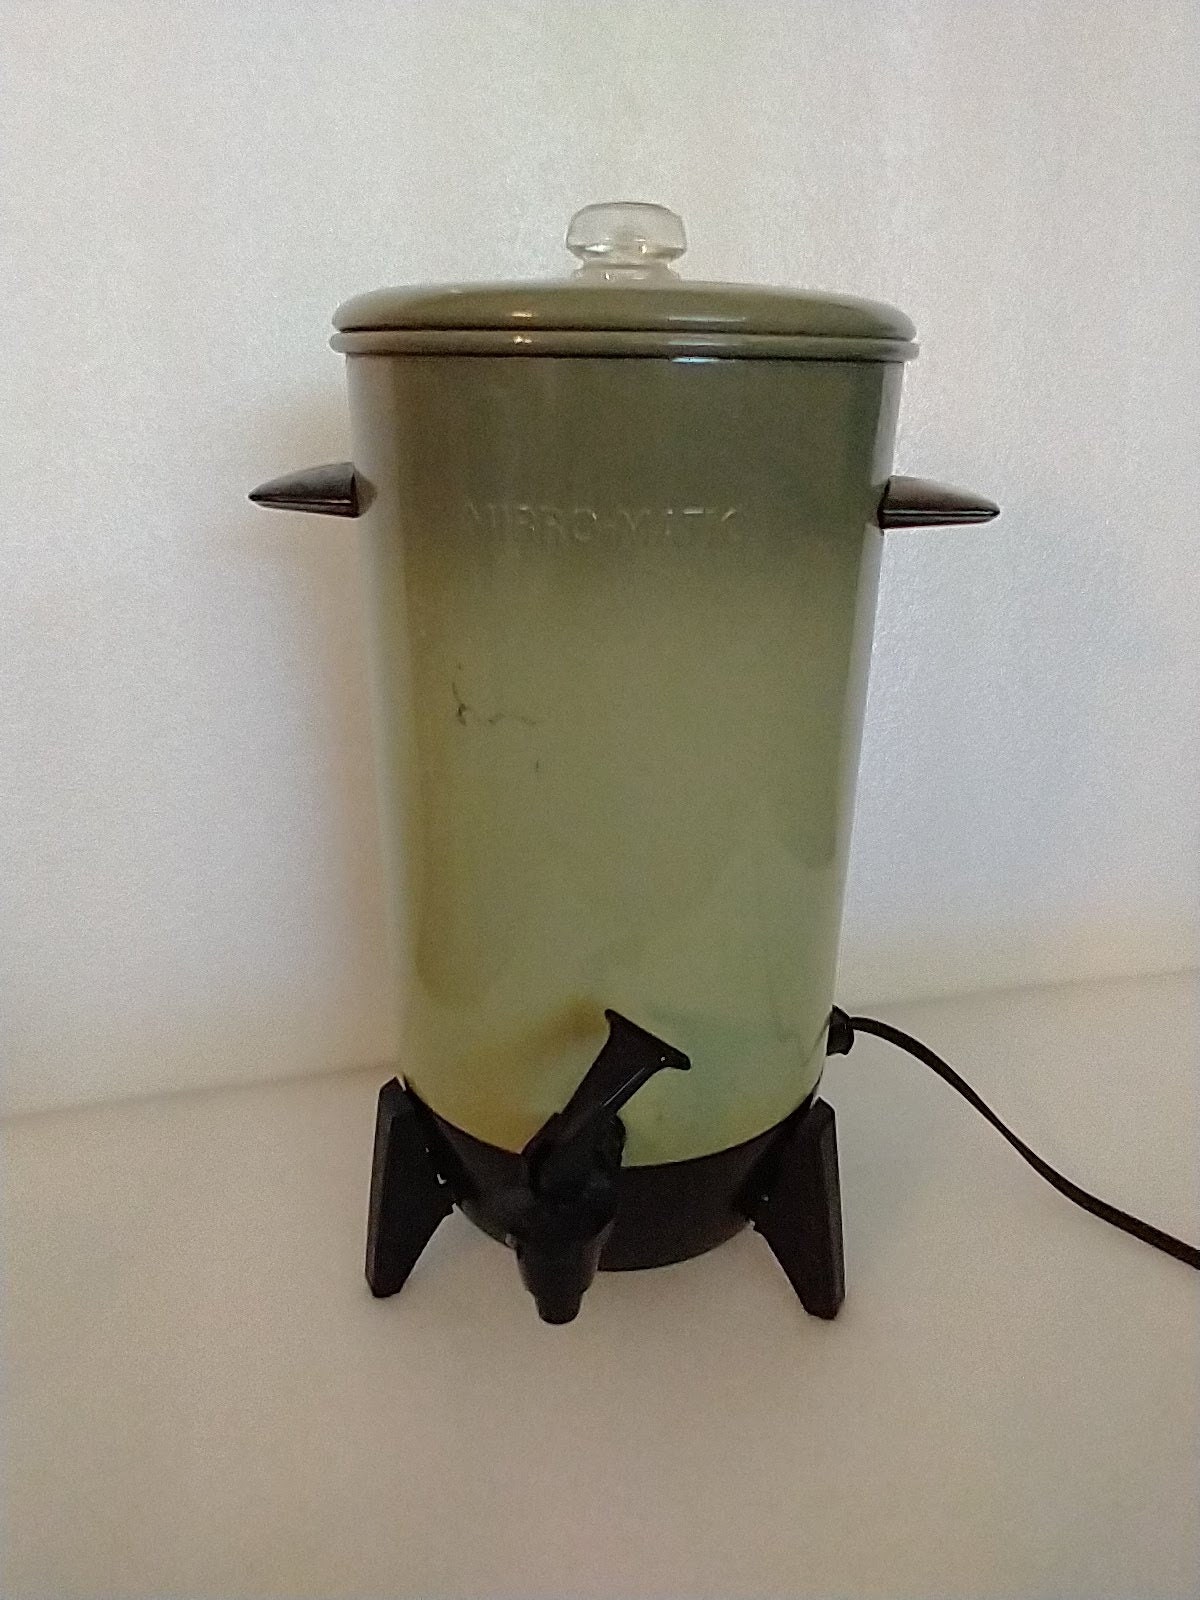 Vintage MIRRO-MATIC 10-35 Cup Automatic Electric Coffee Percolator Large  Potluck -  Log Cabin Decor